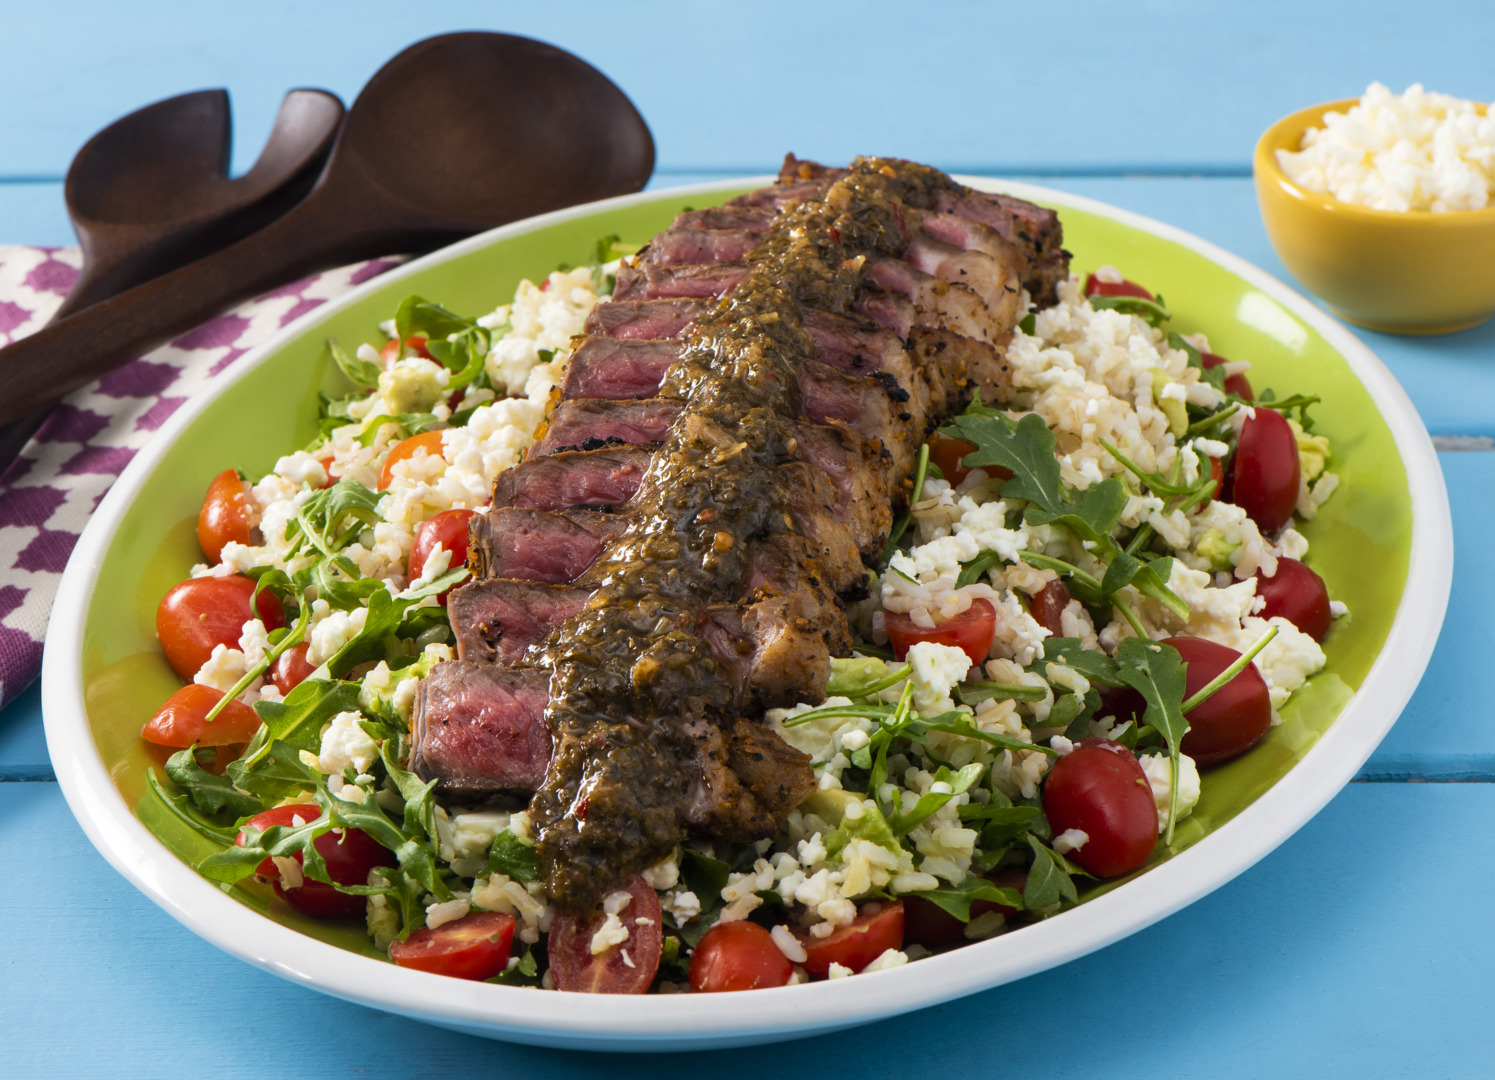 https://minuterice.com/wp-content/uploads/2021/04/Grilled-Steak-and-Brown-Rice-Salad-Platter.jpg